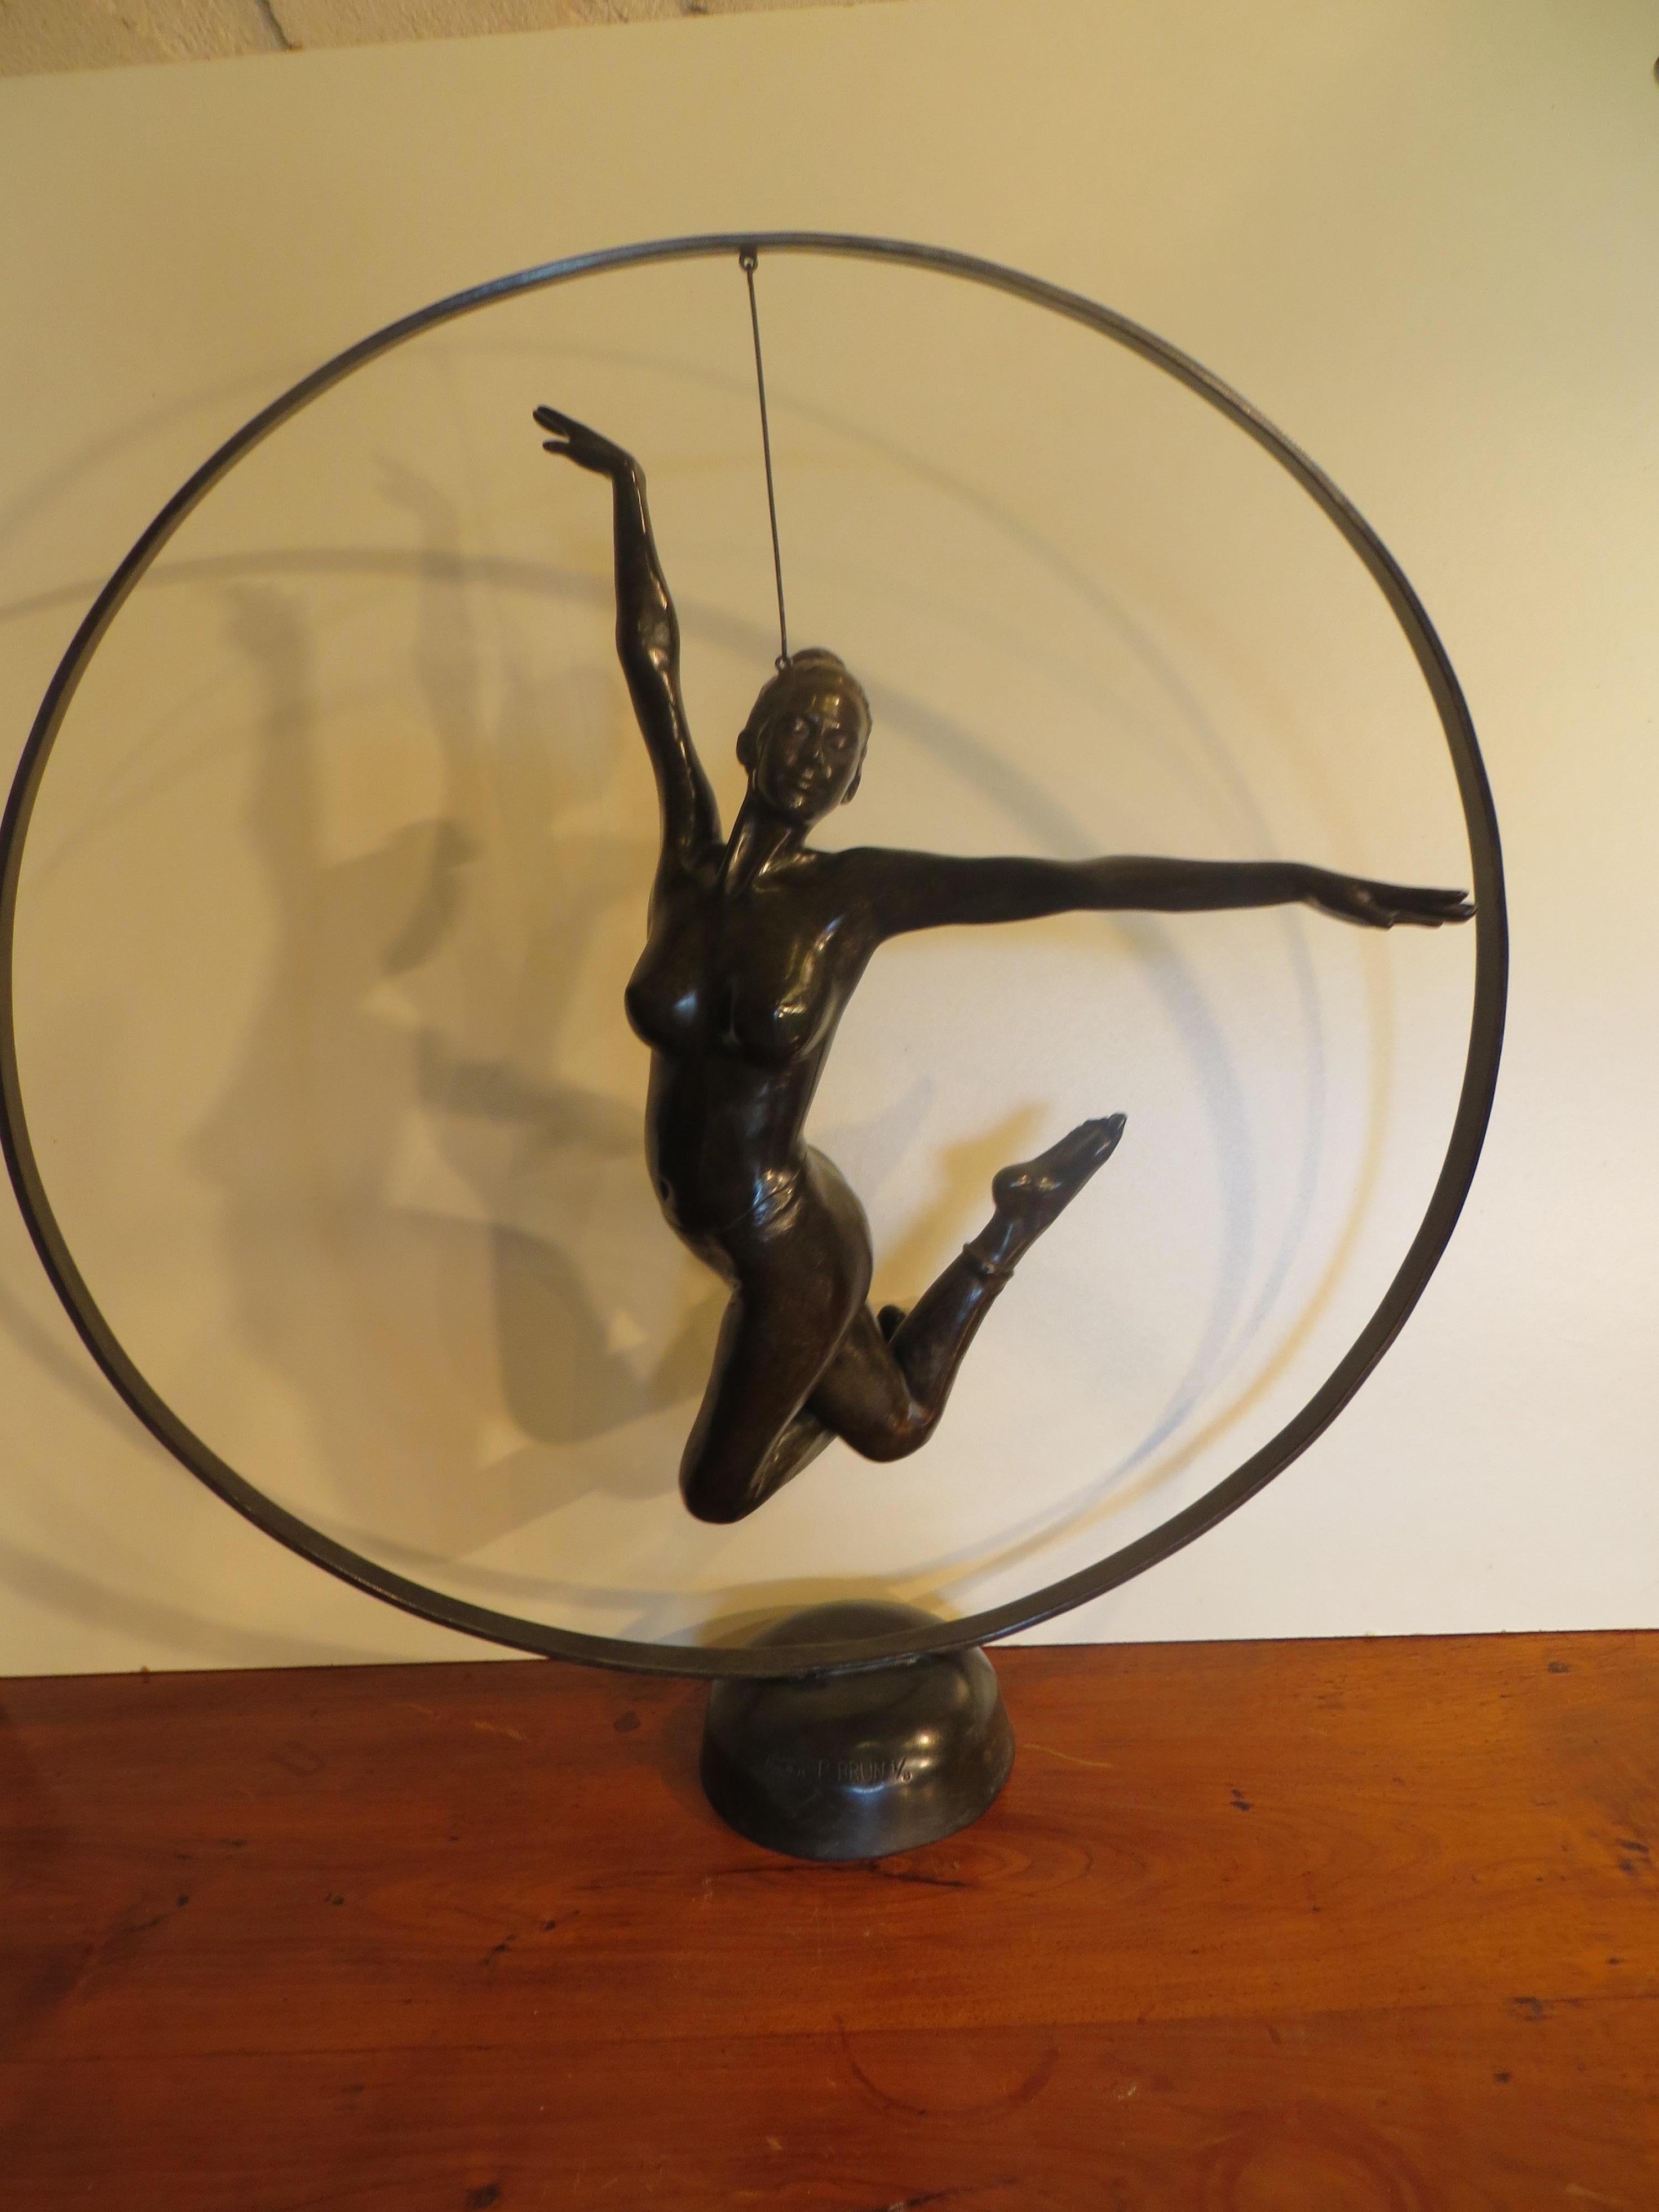 La chute suspendue - Or Figurative Sculpture par Patrick Brun